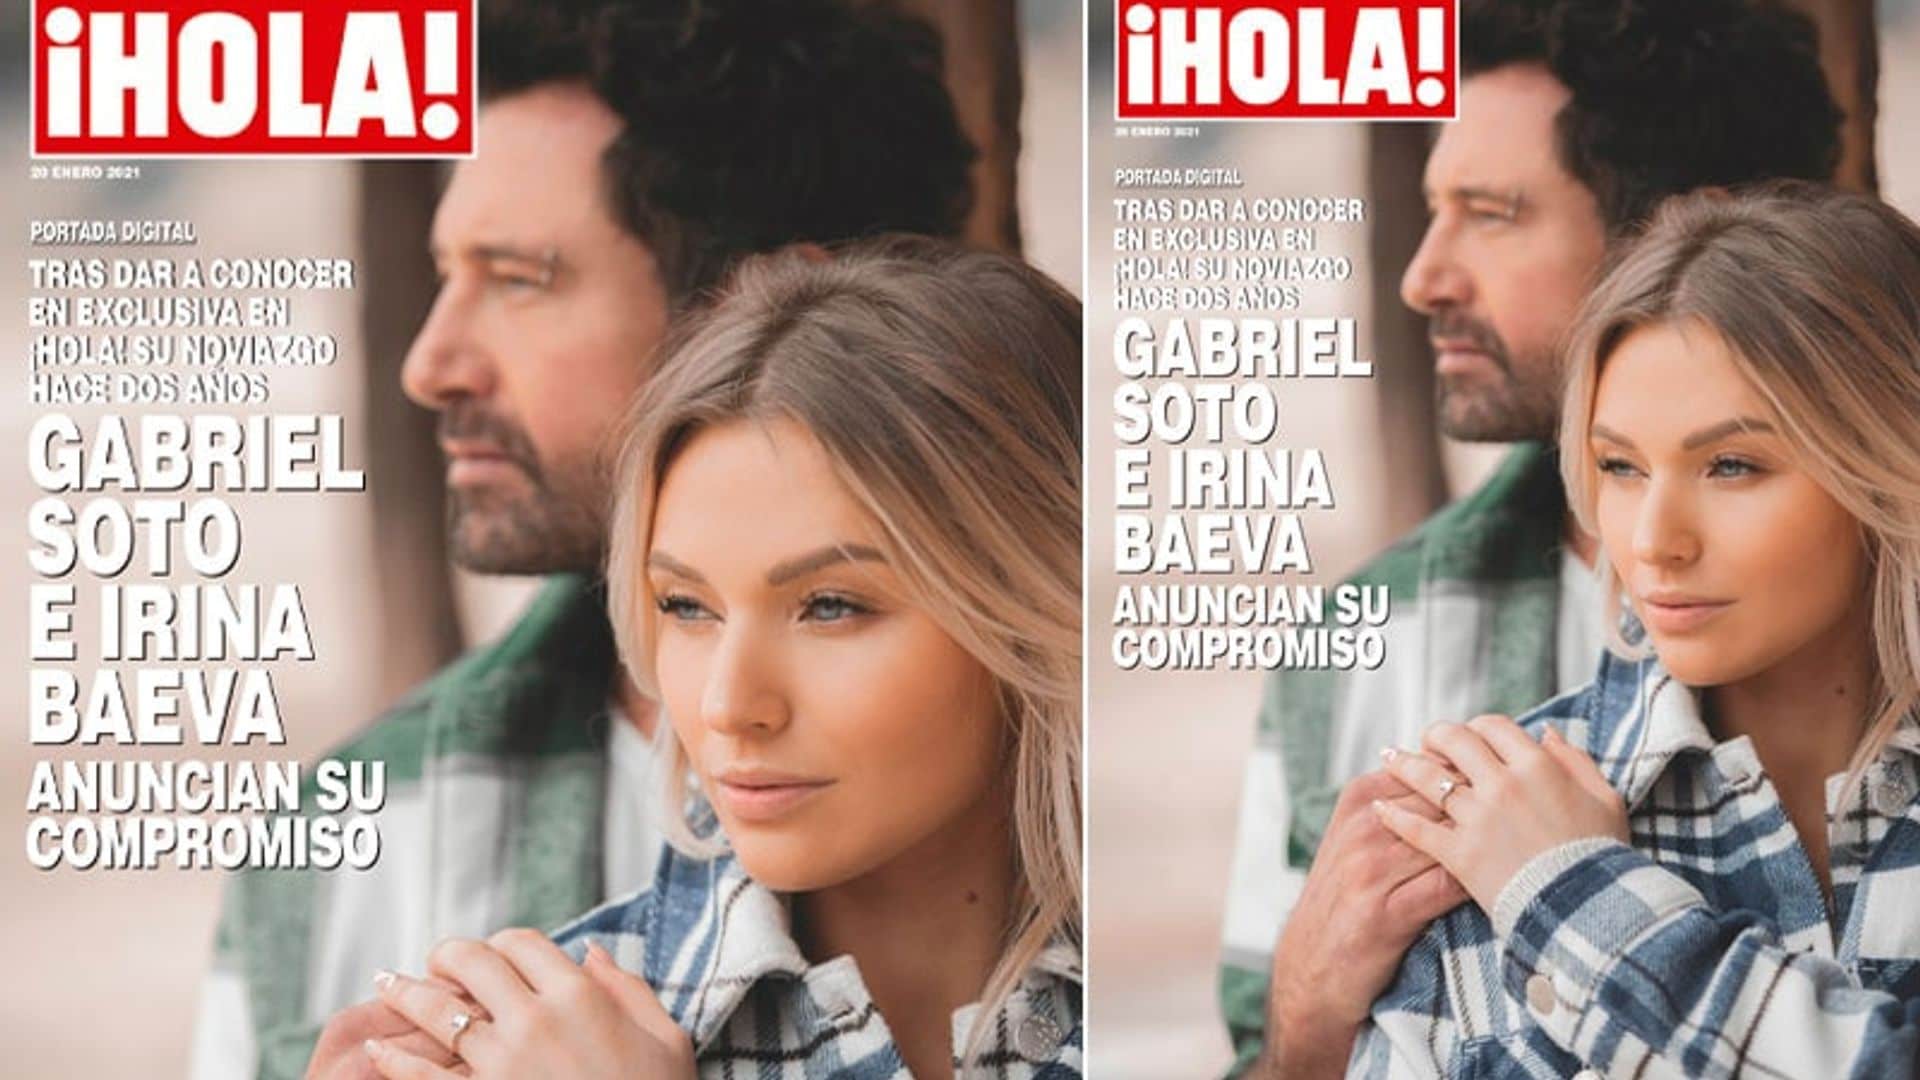 Gabriel Soto e Irina Baeva anuncian su compromiso